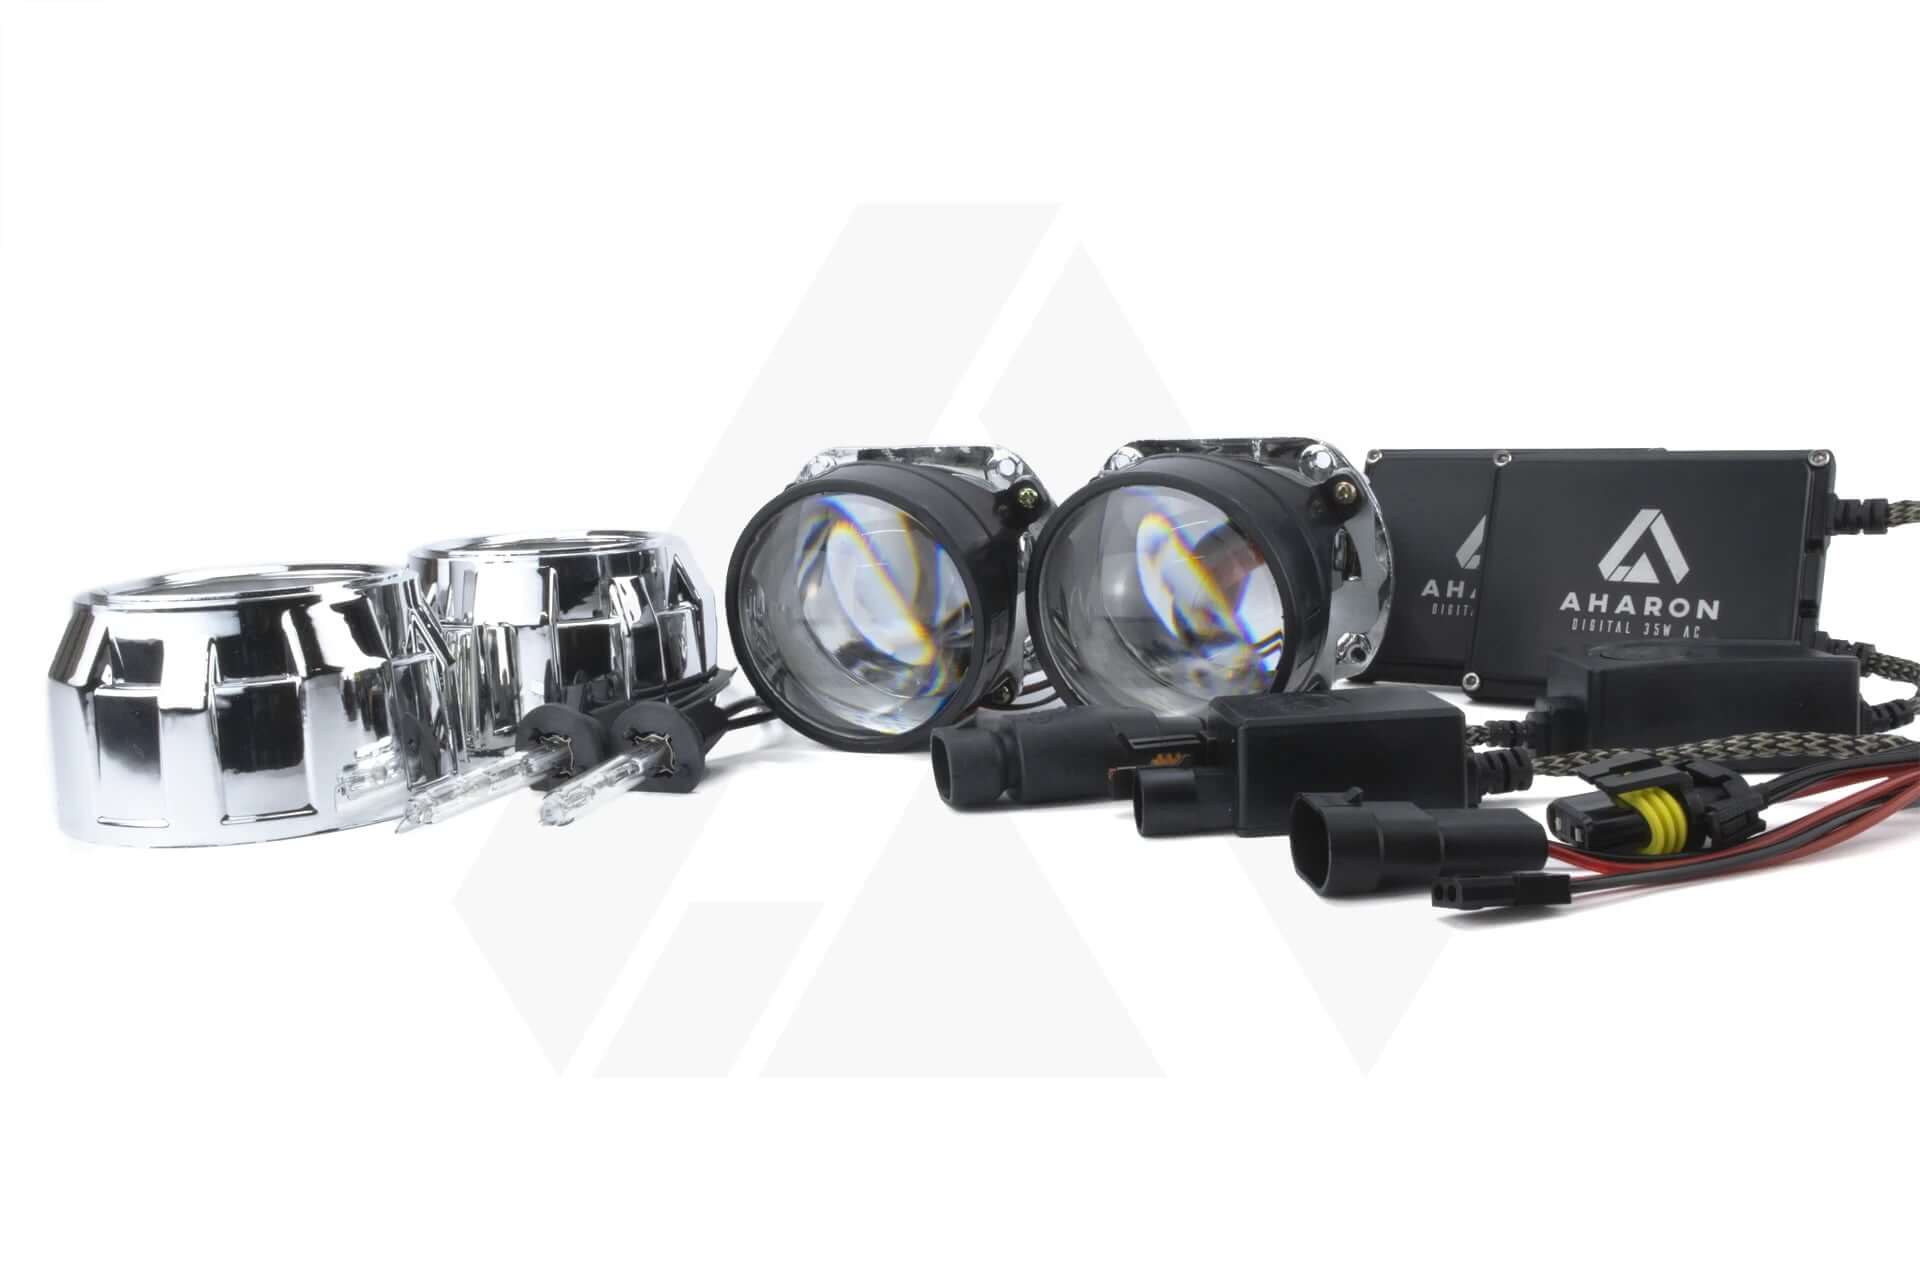 Bi-Xenon / LED-Scheinwerfer - Nachrüstung Audi A3 8P - Car Gadgets BV